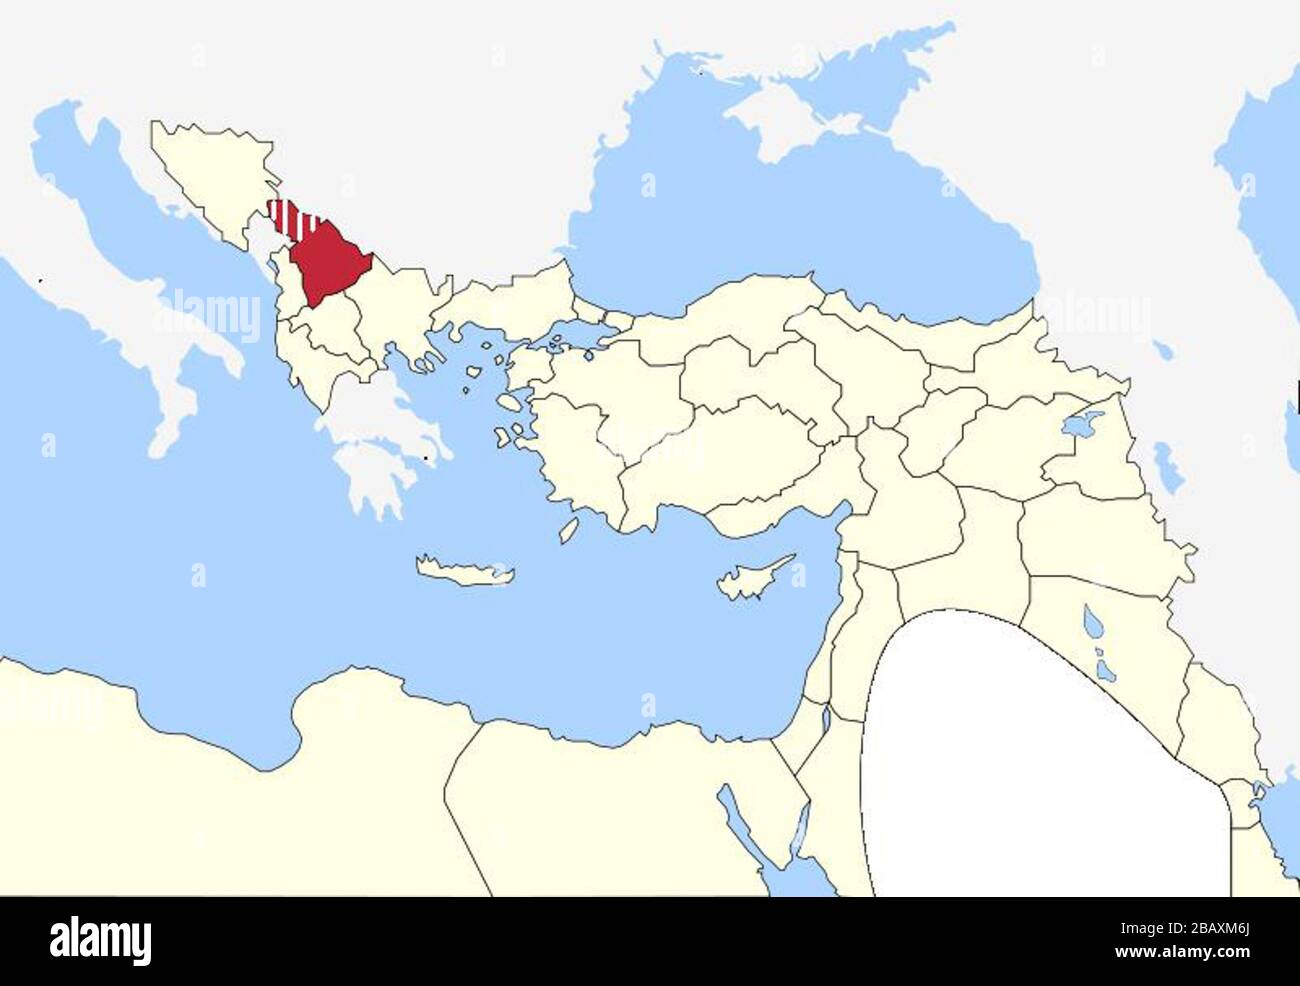 ottoman empire map 1900